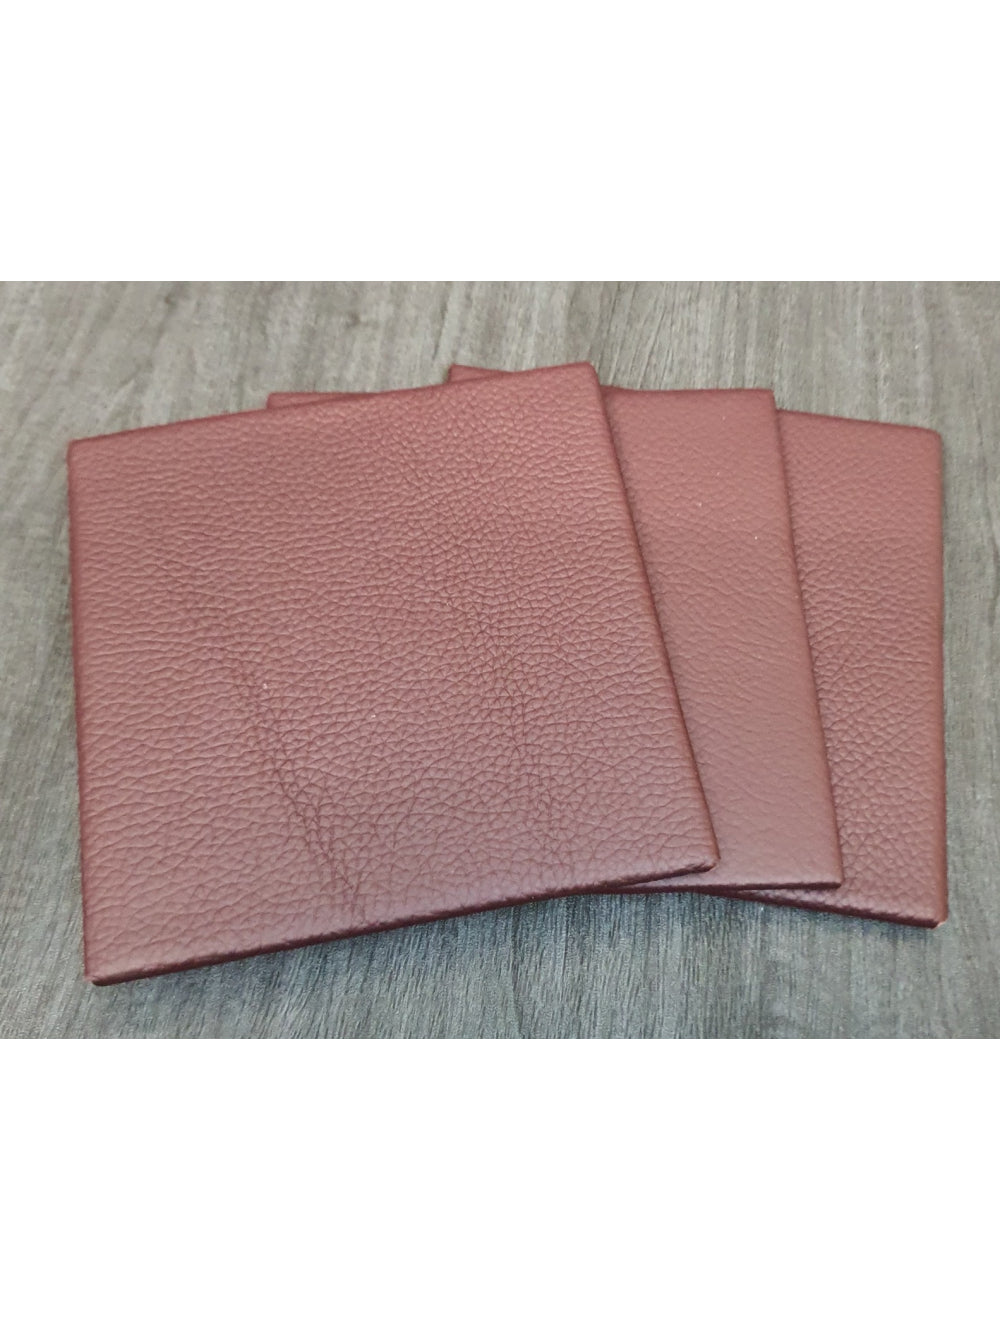 Dark Grapeshelly Leather Coaster- 10 cm SQ (salgsartikel)